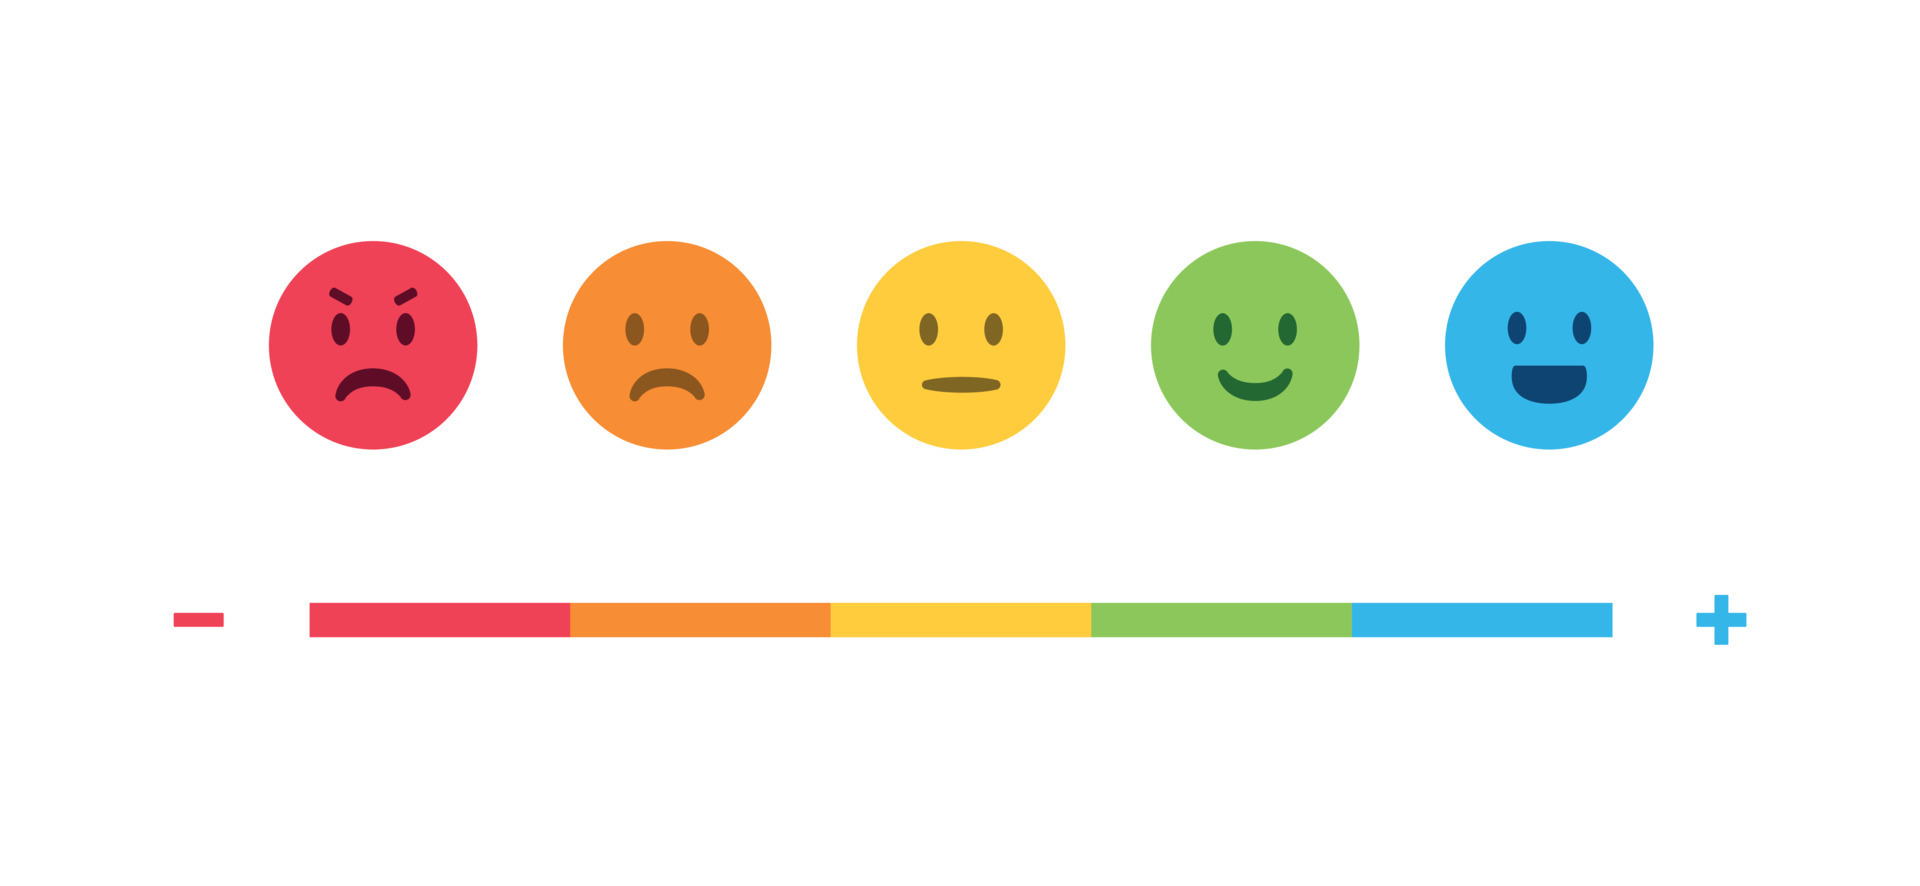 Customer satisfaction rating feedback emotion scale isolated. Feedback ...